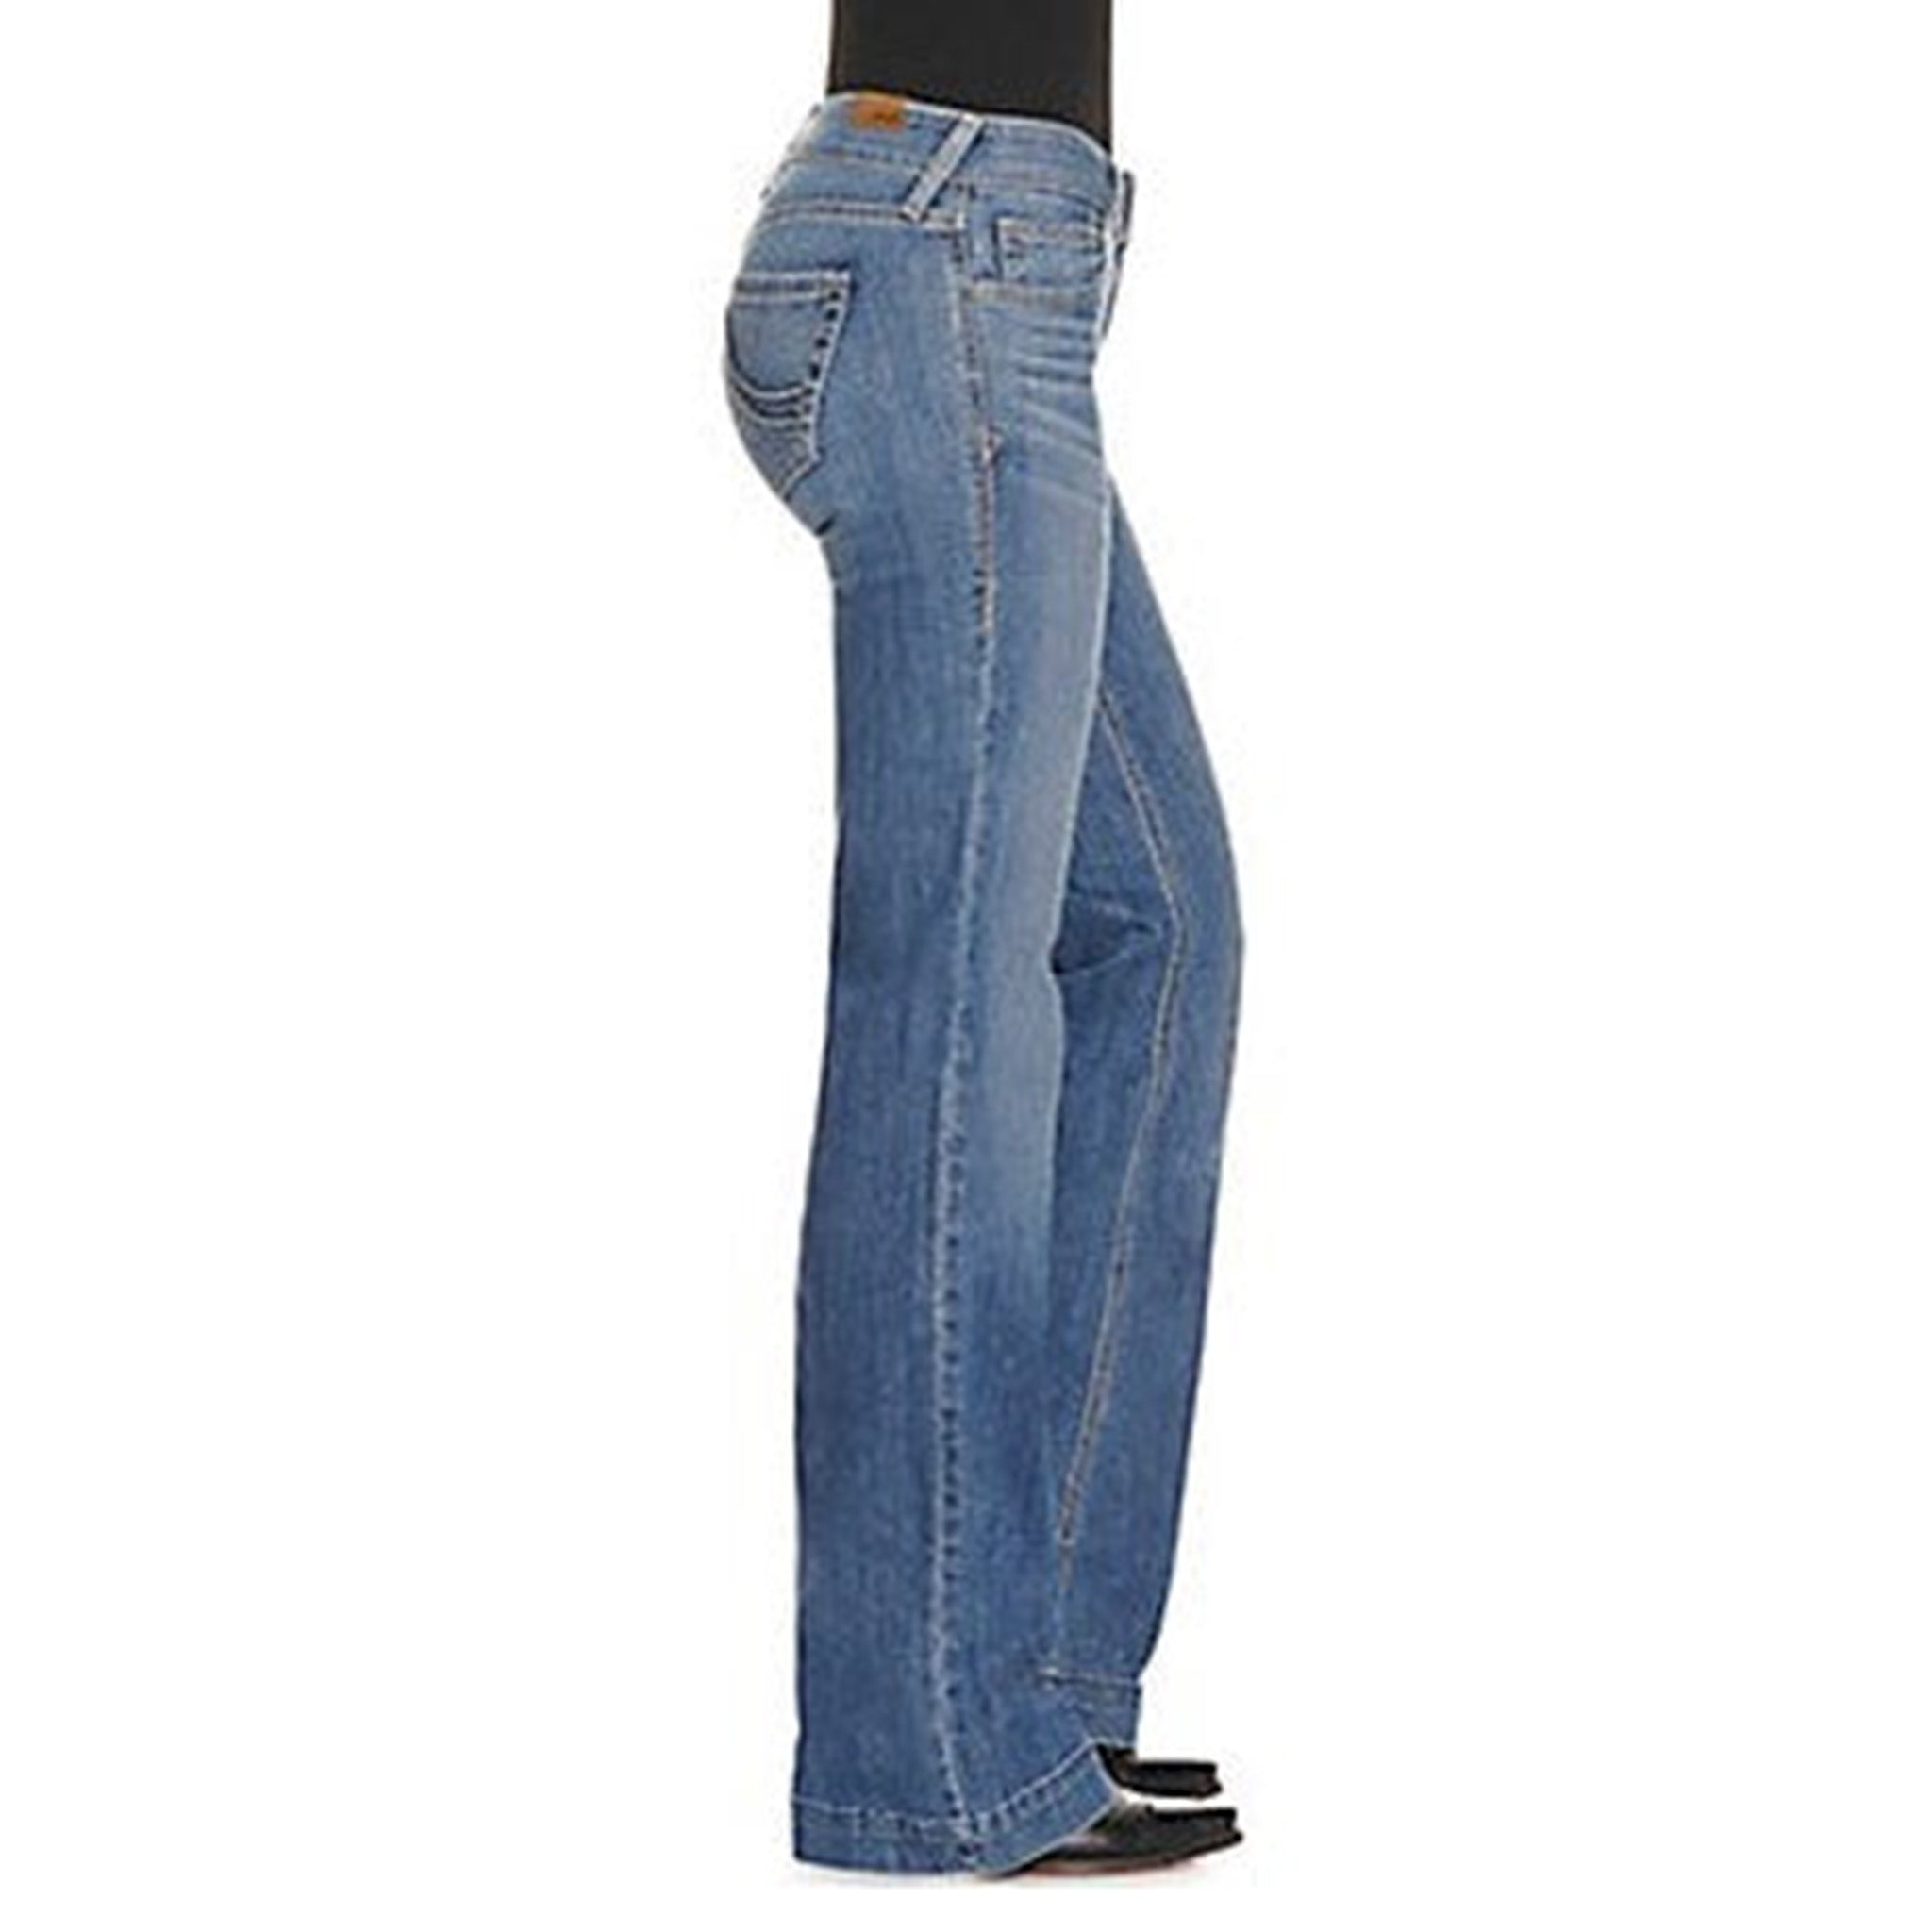 Aggregate 186+ trouser leg jeans